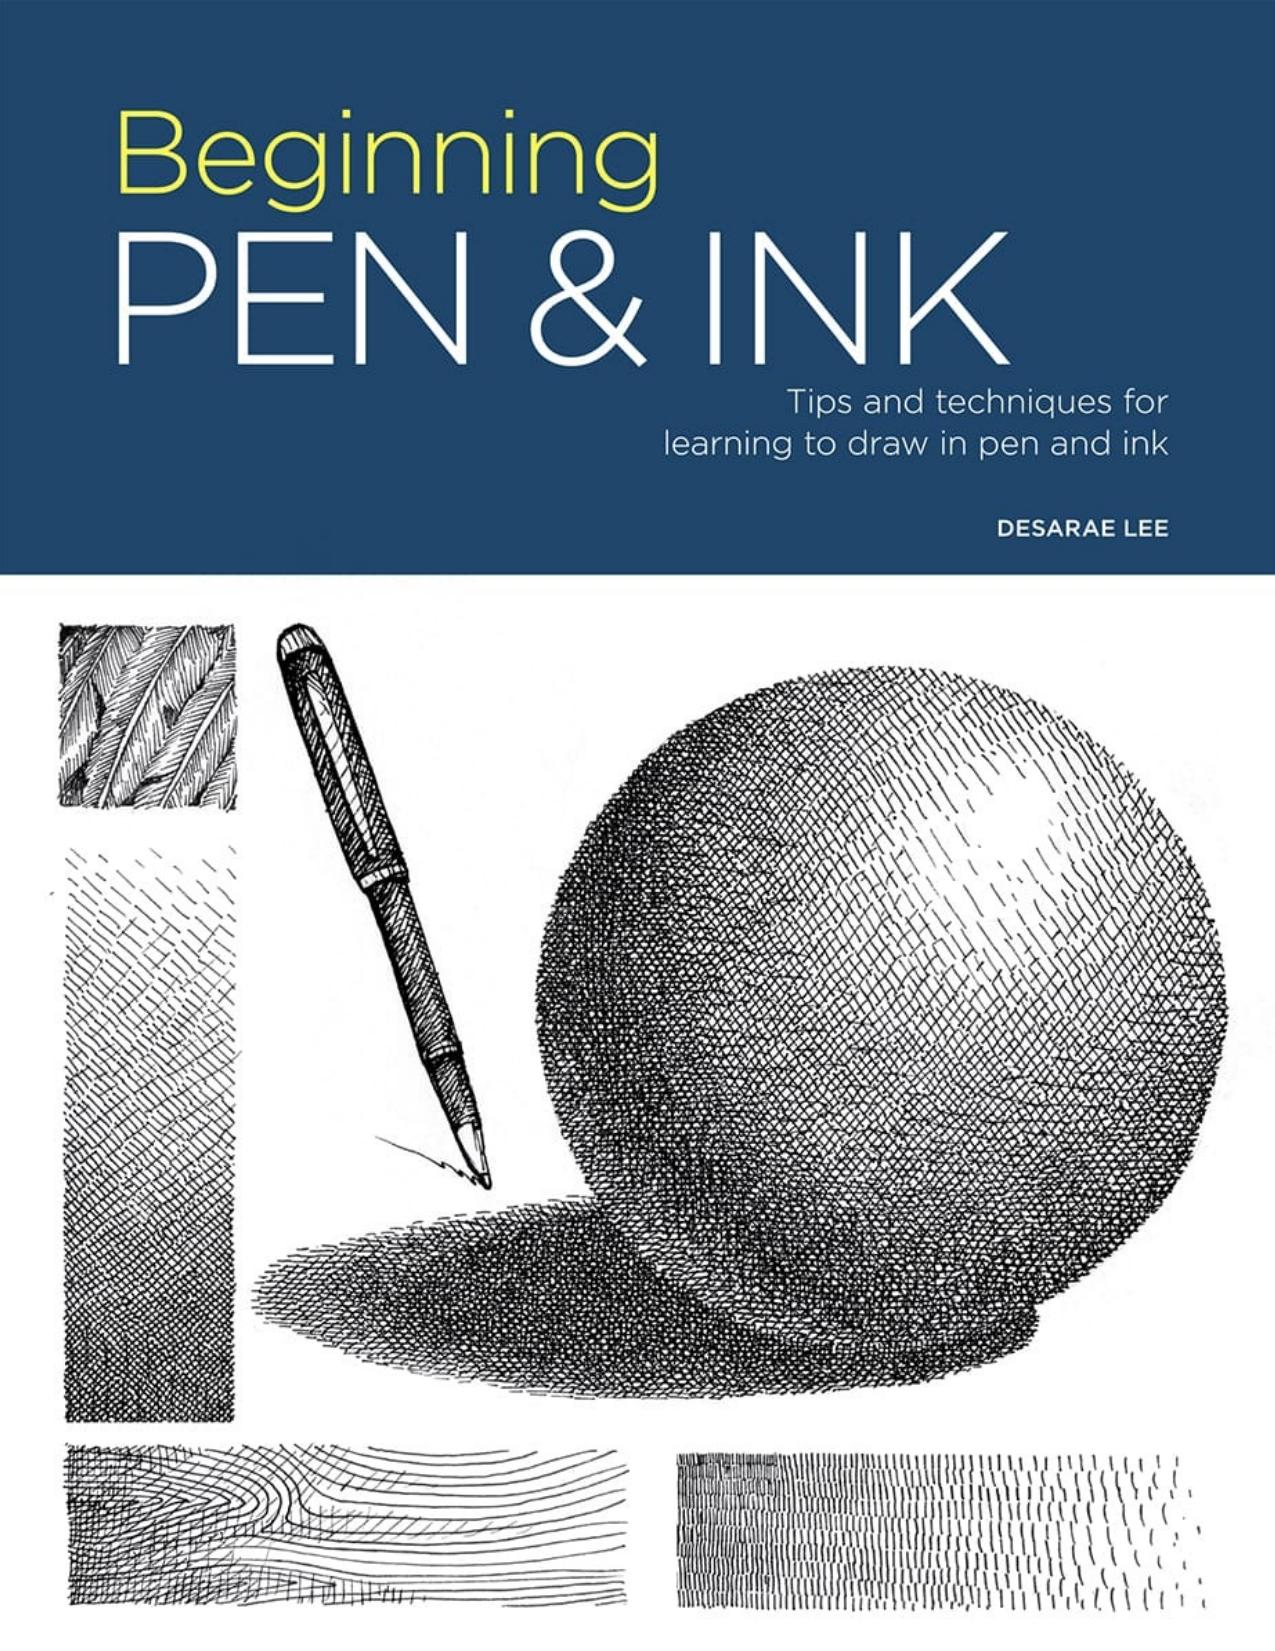 Portfolio: Beginning Pen & Ink by Desarae Lee